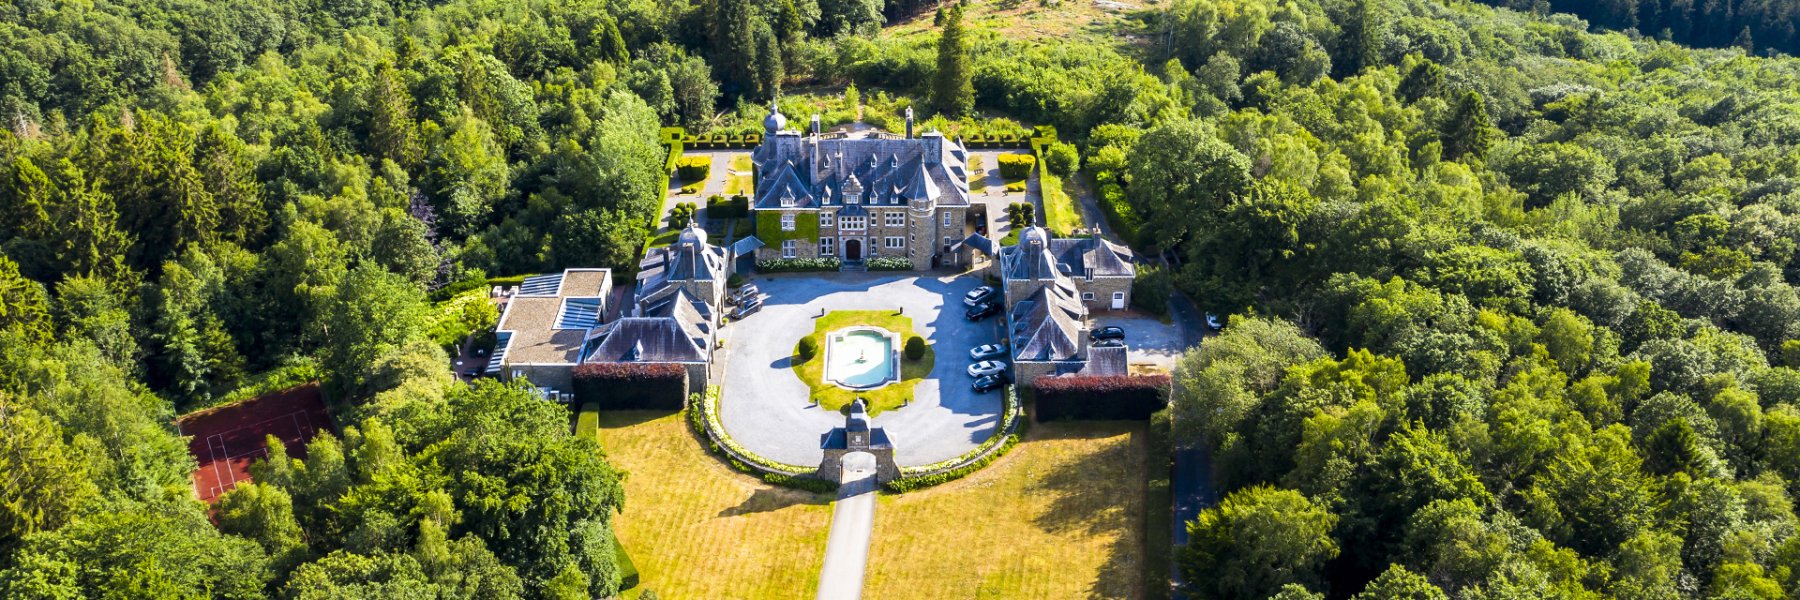 Luxuriöse Ferienhäuser in Belgien